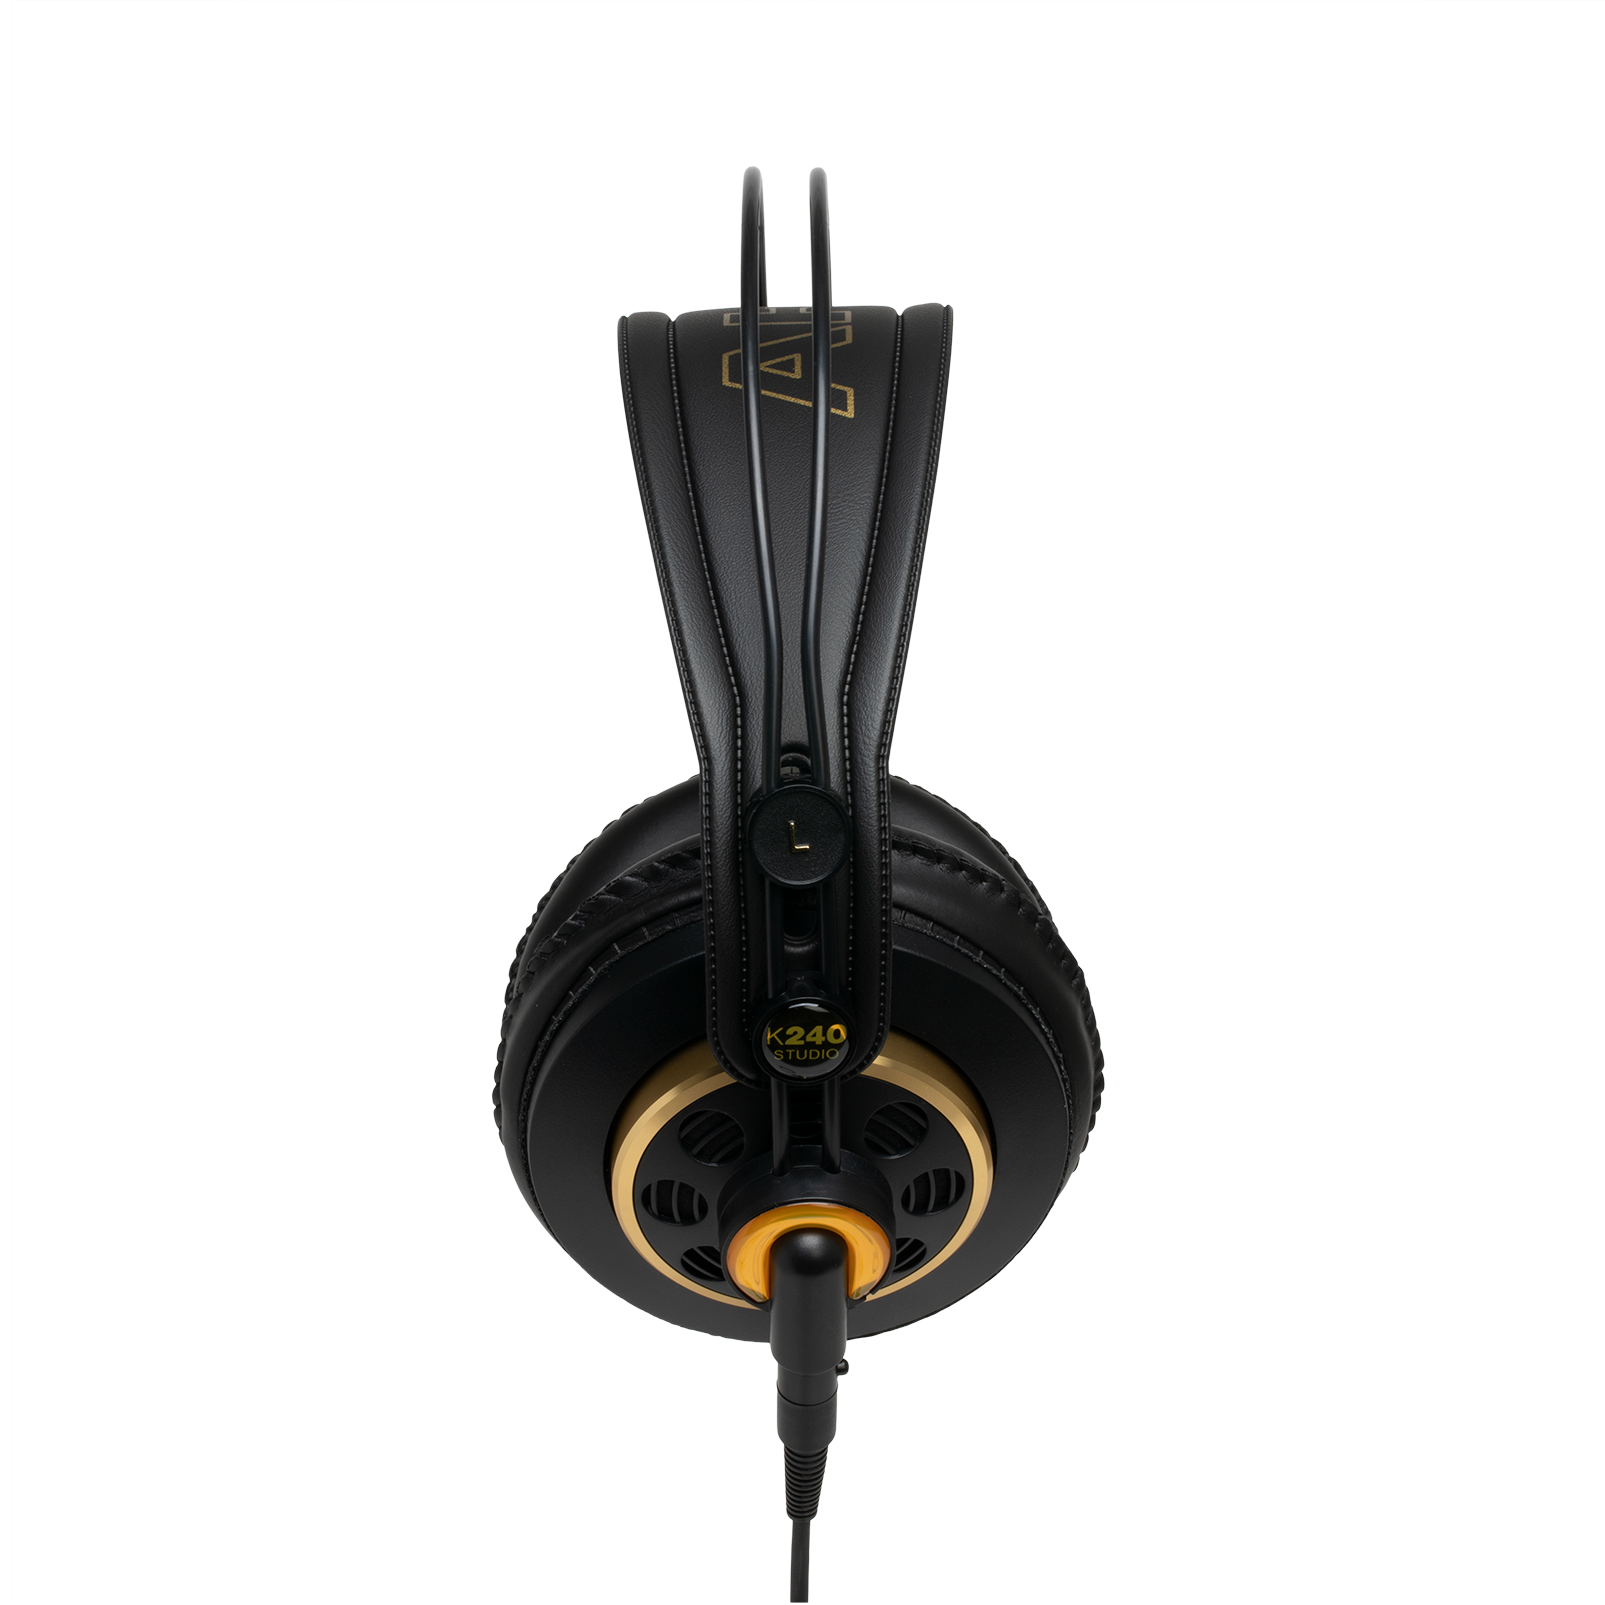 AKG K240 Studio Professional Headphones for Studio, Podcsting, DJ Monitoring